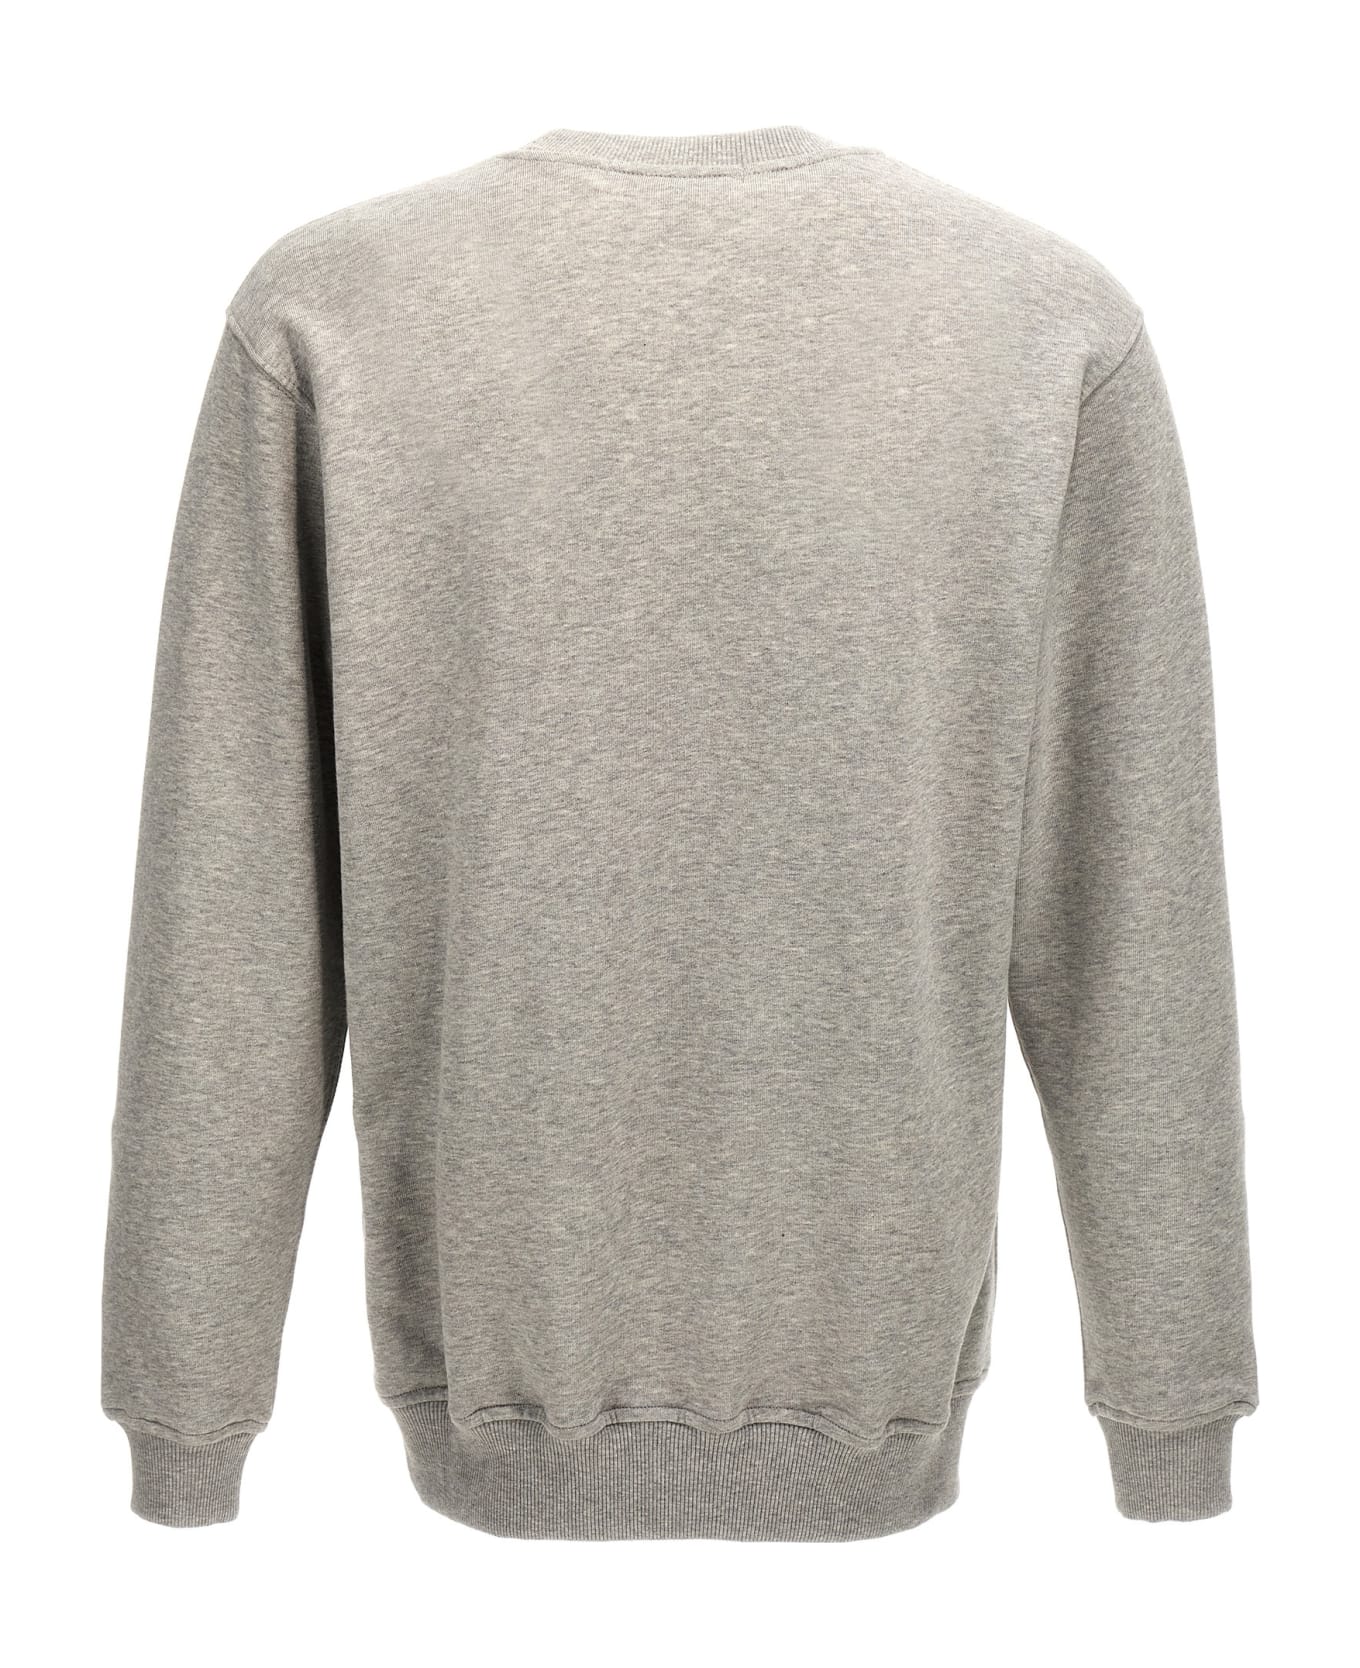 Comme des Garçons Shirt 'andy Warhol' Sweatshirt - Gray